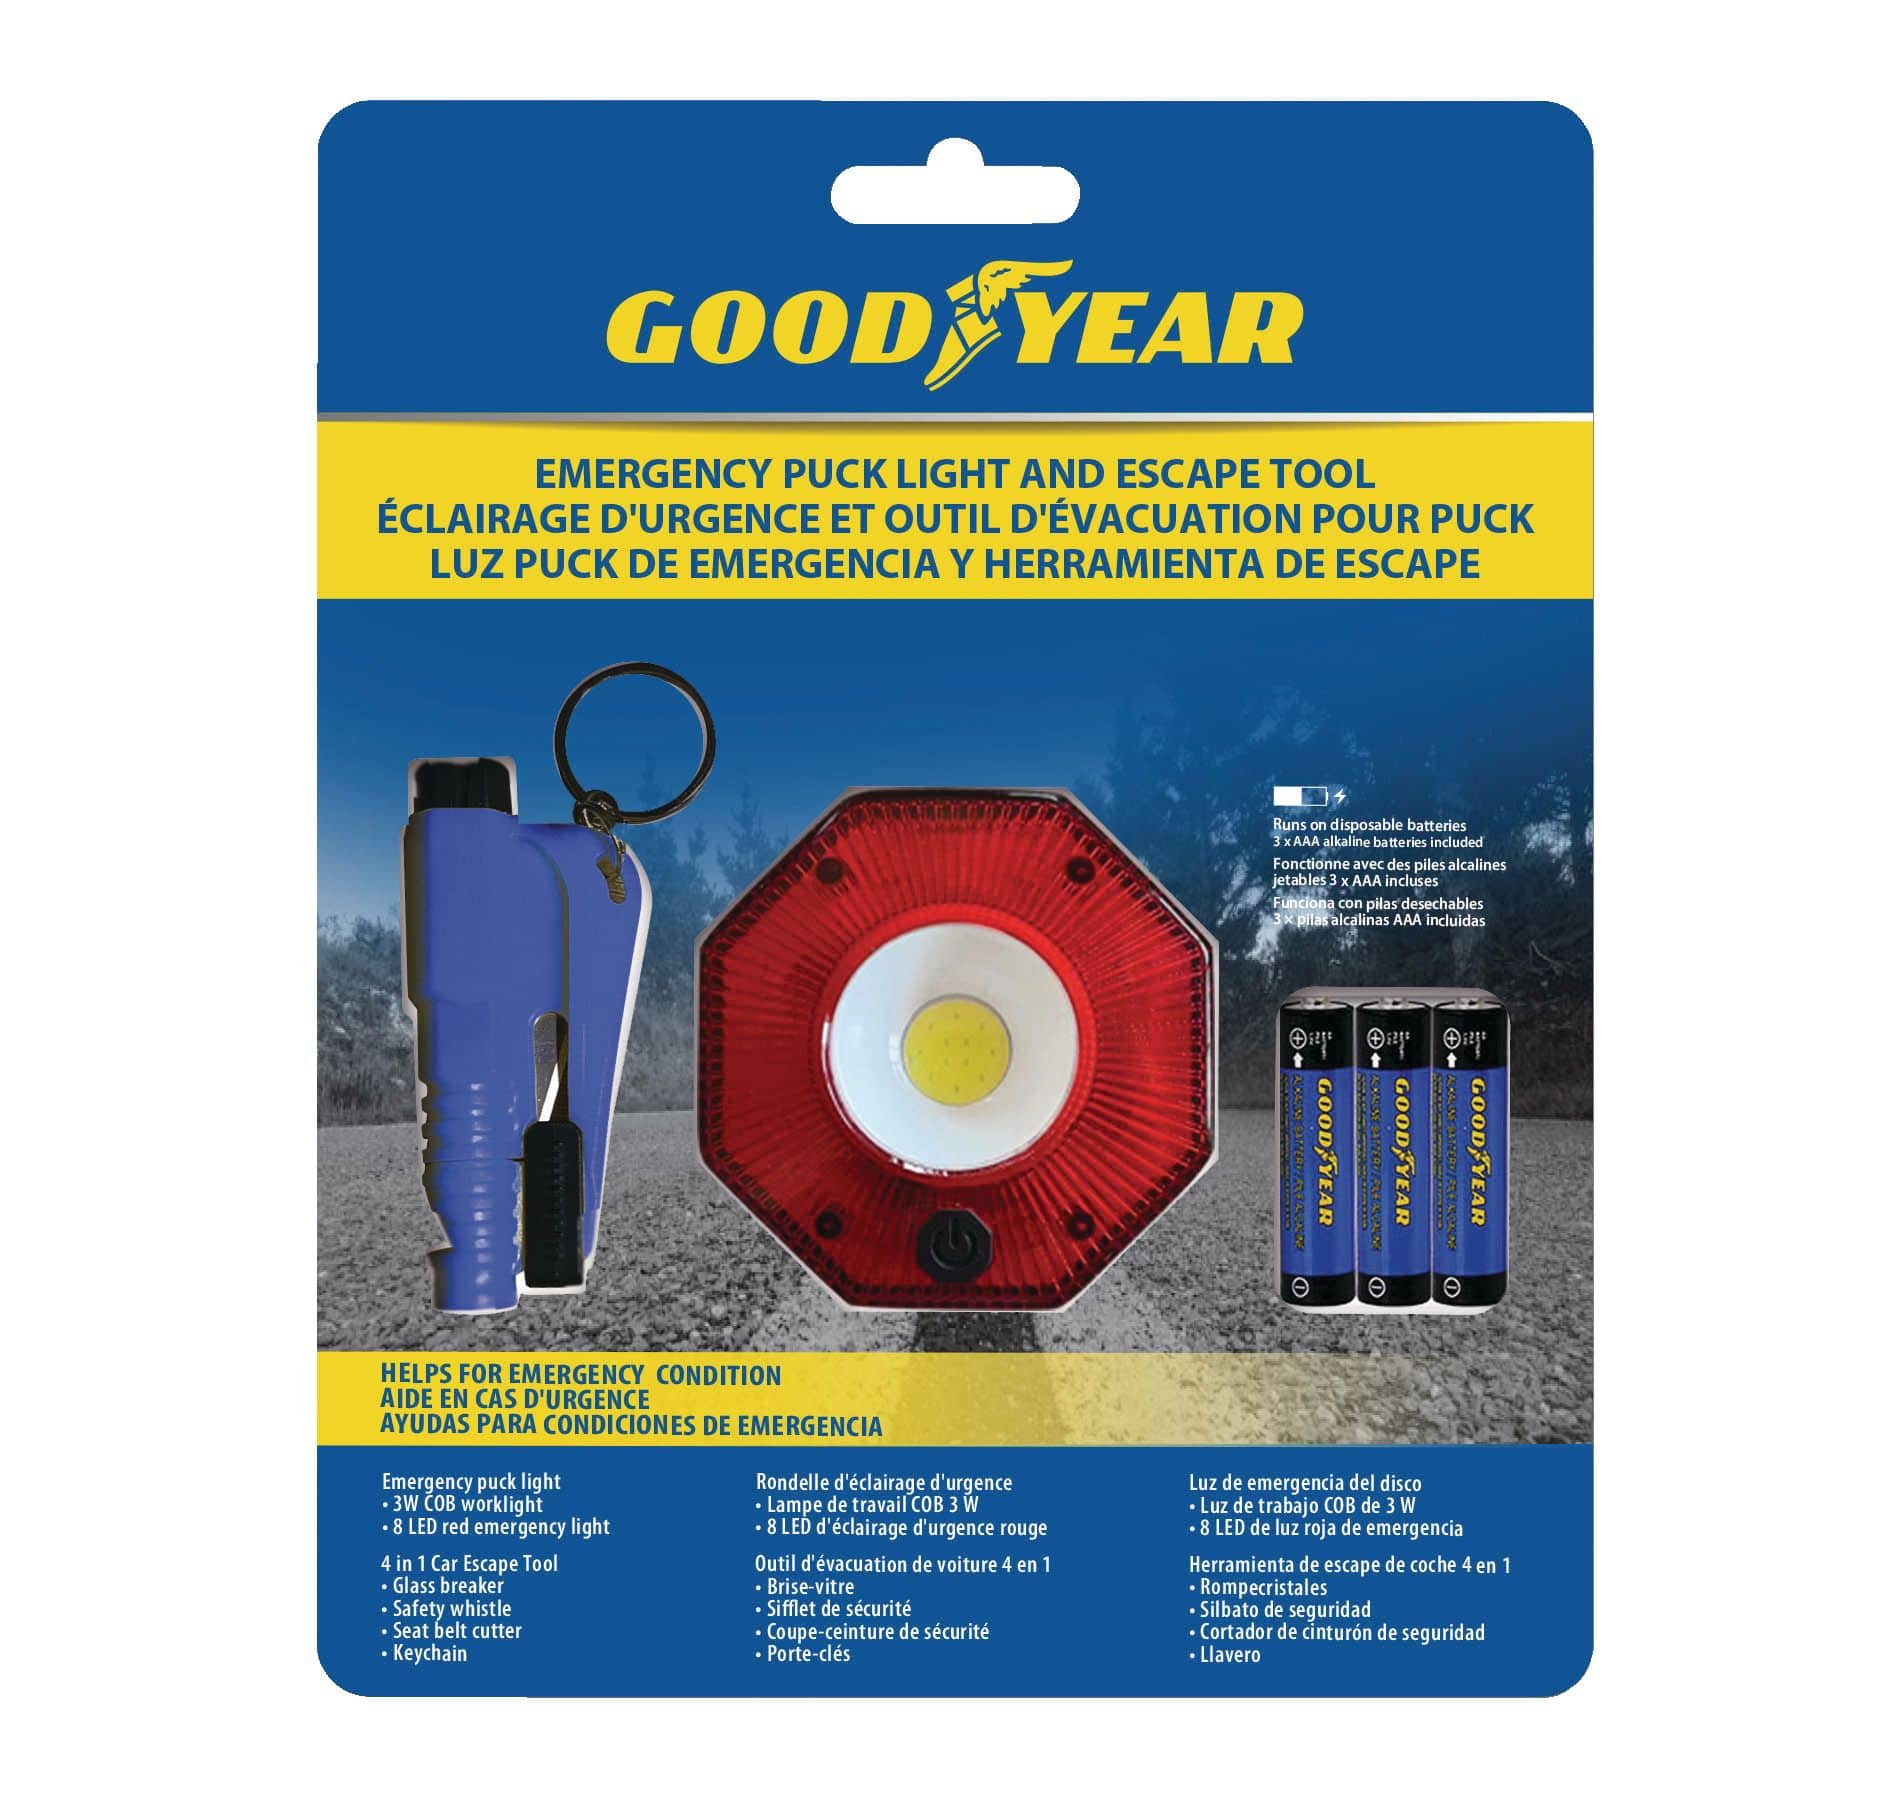 Goodyear Roadside Emergency Puck Light & Escape Tool